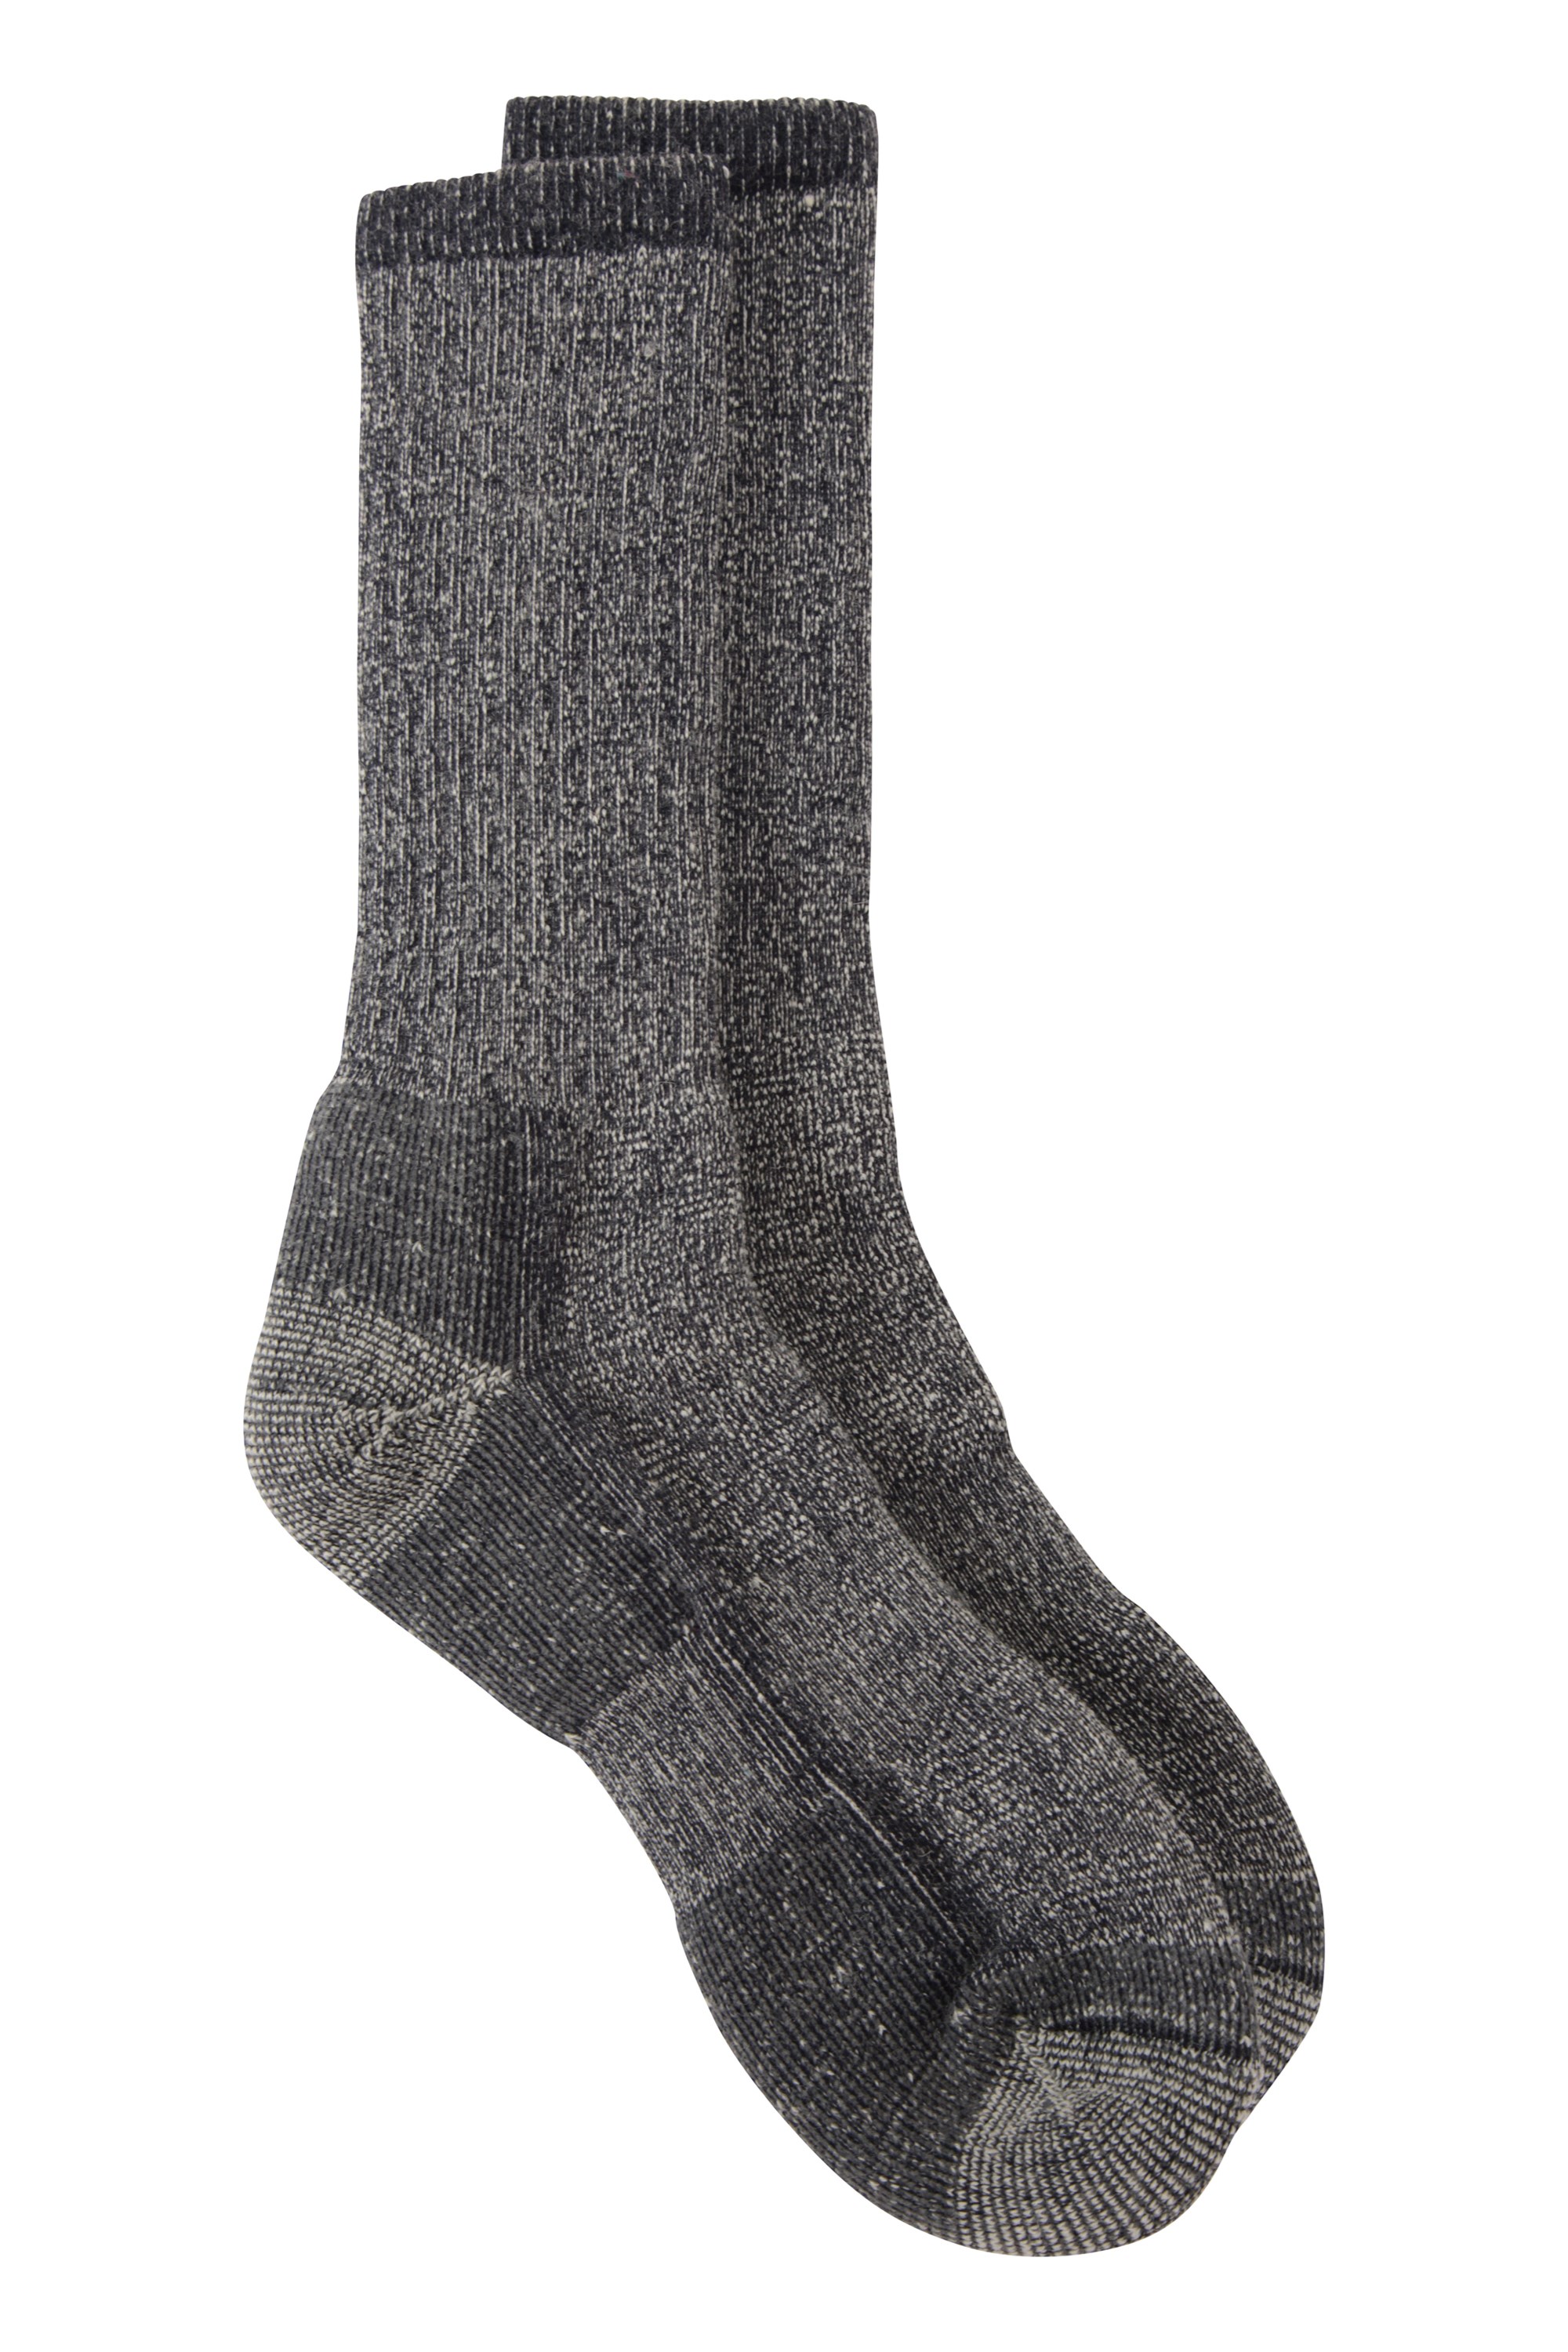 Mountain Warehouse Mens Trek Wool Socks Grey